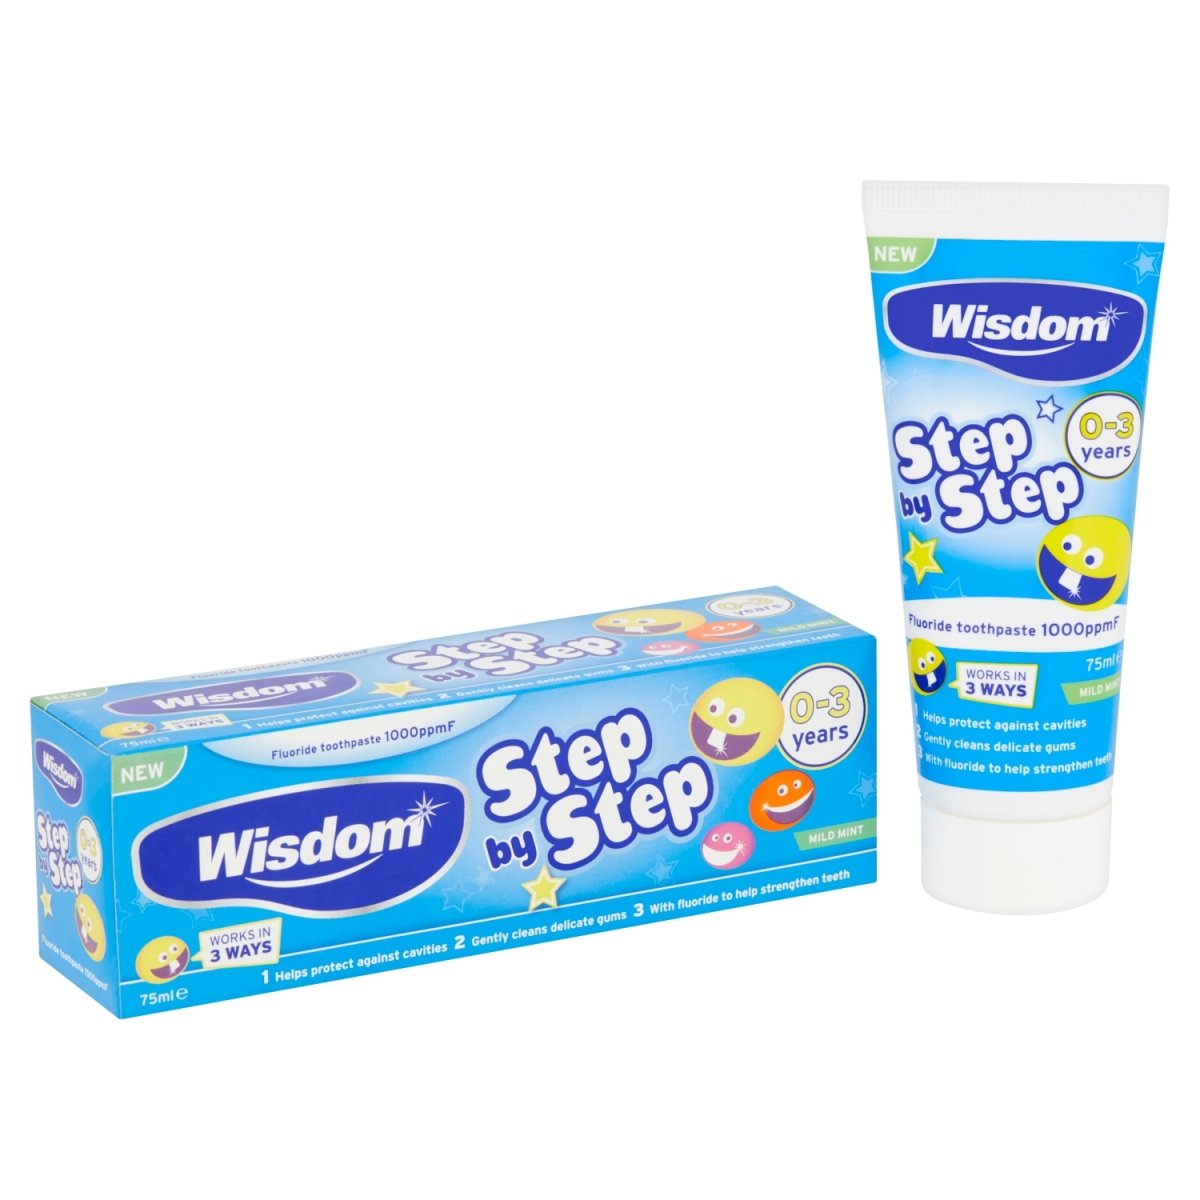 Wisdom Step by Step 0-3 Toothpaste - Intamarque 5028763009493